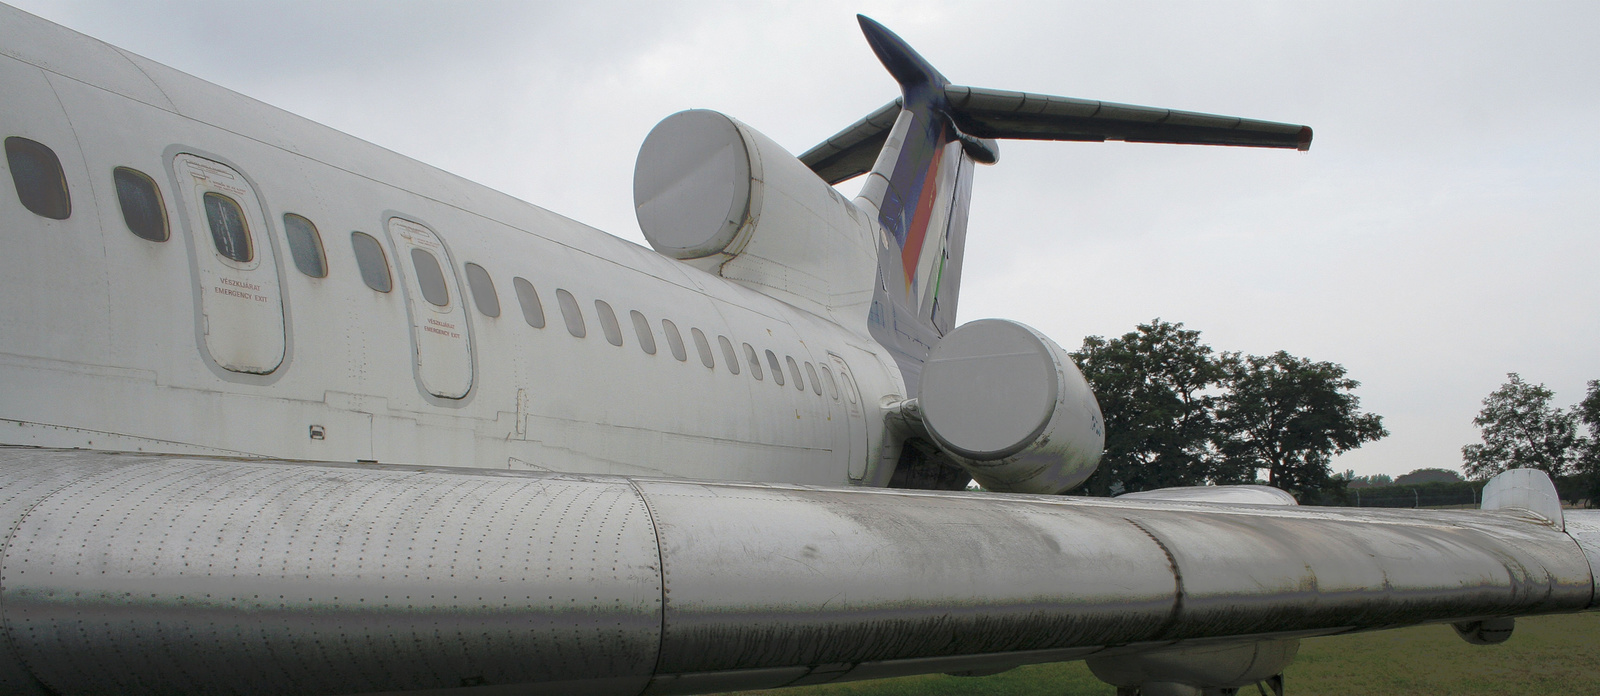 TU-154 hajtóművek